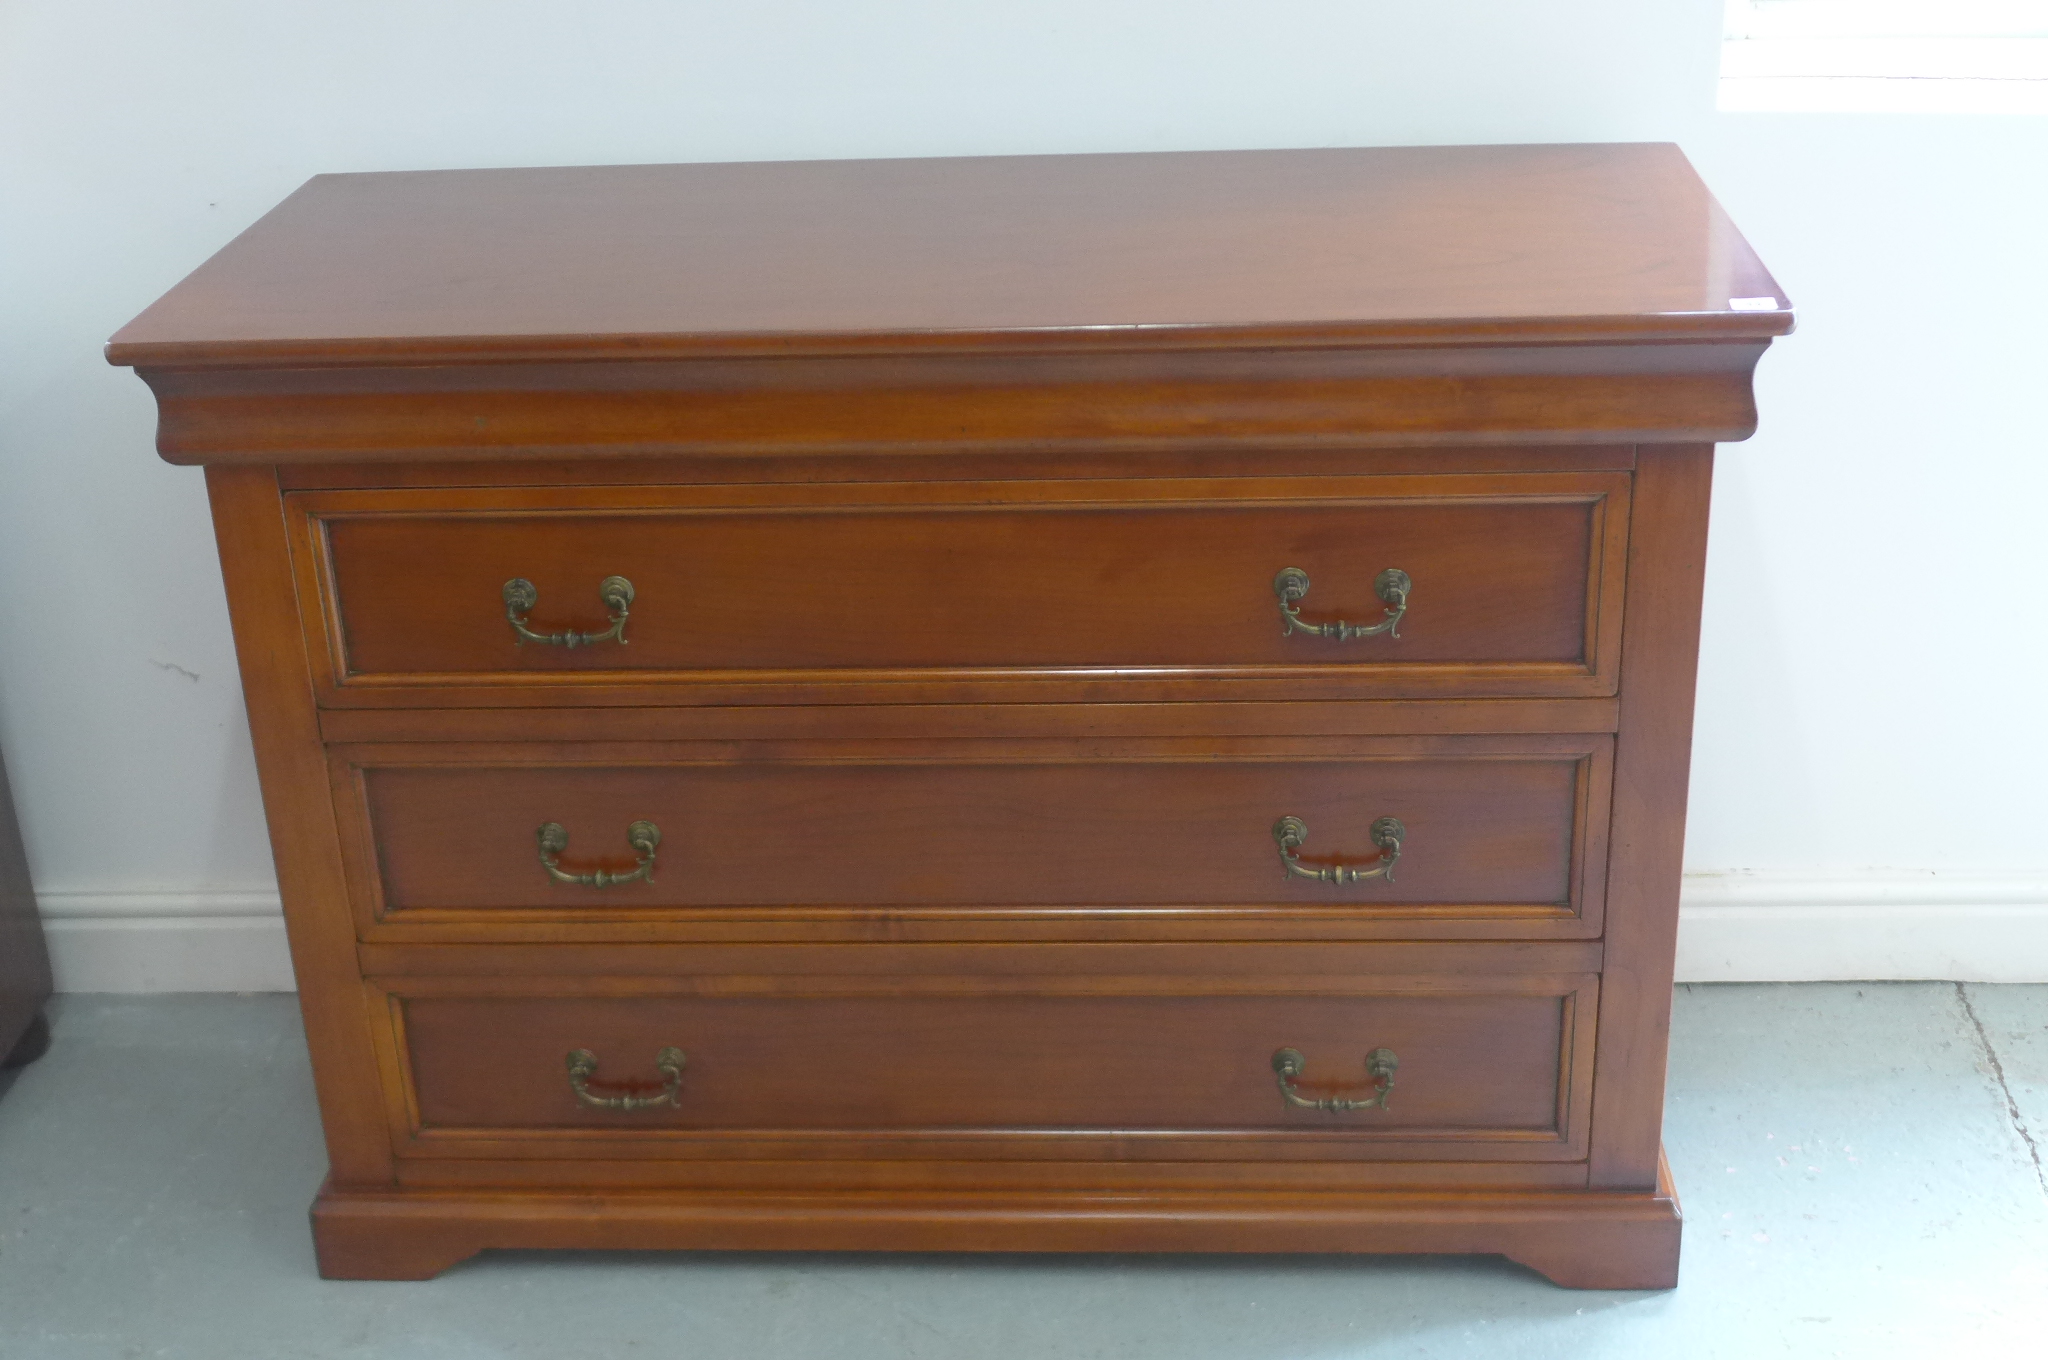 A 20th century cherry wood three drawer chest, 89cm tall x 125cm x 54cm - by Consorzio Mobili